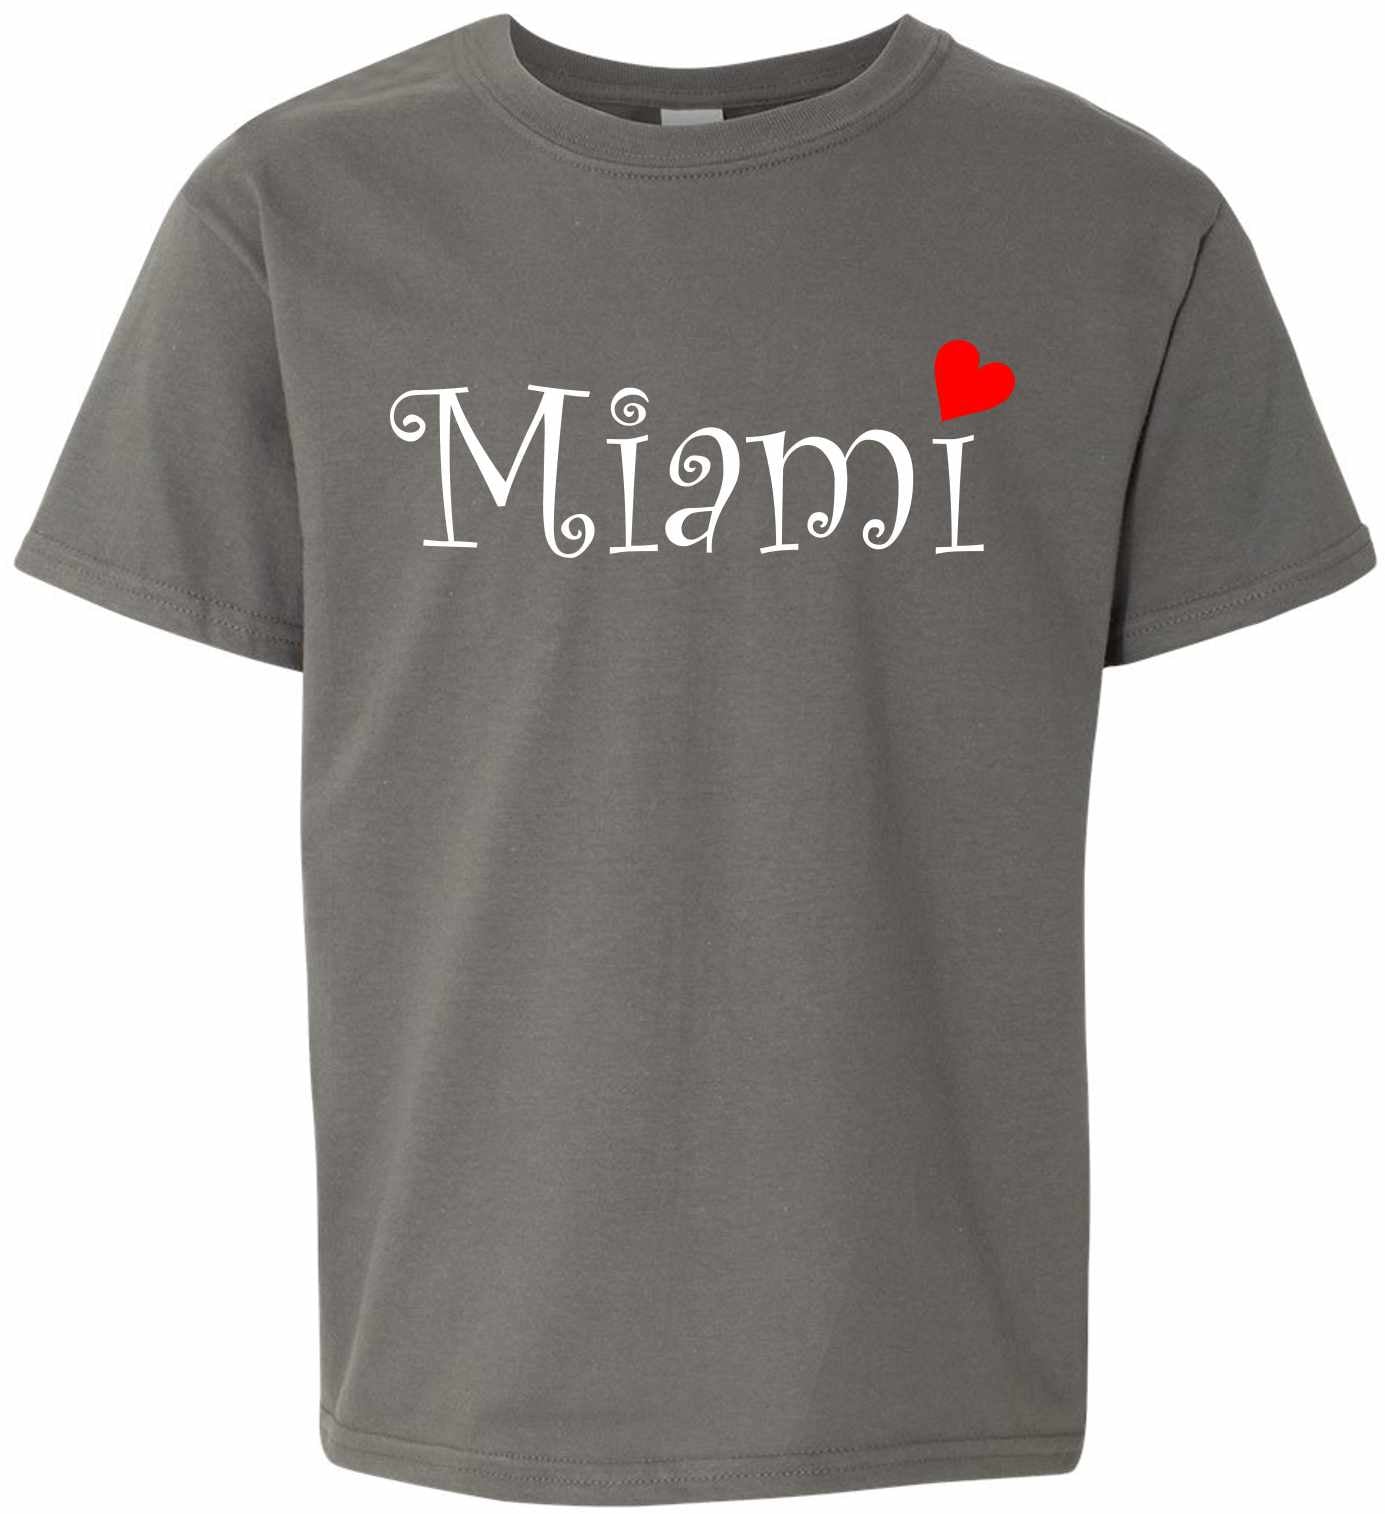 Miami City on Kids T-Shirt (#1331-201)